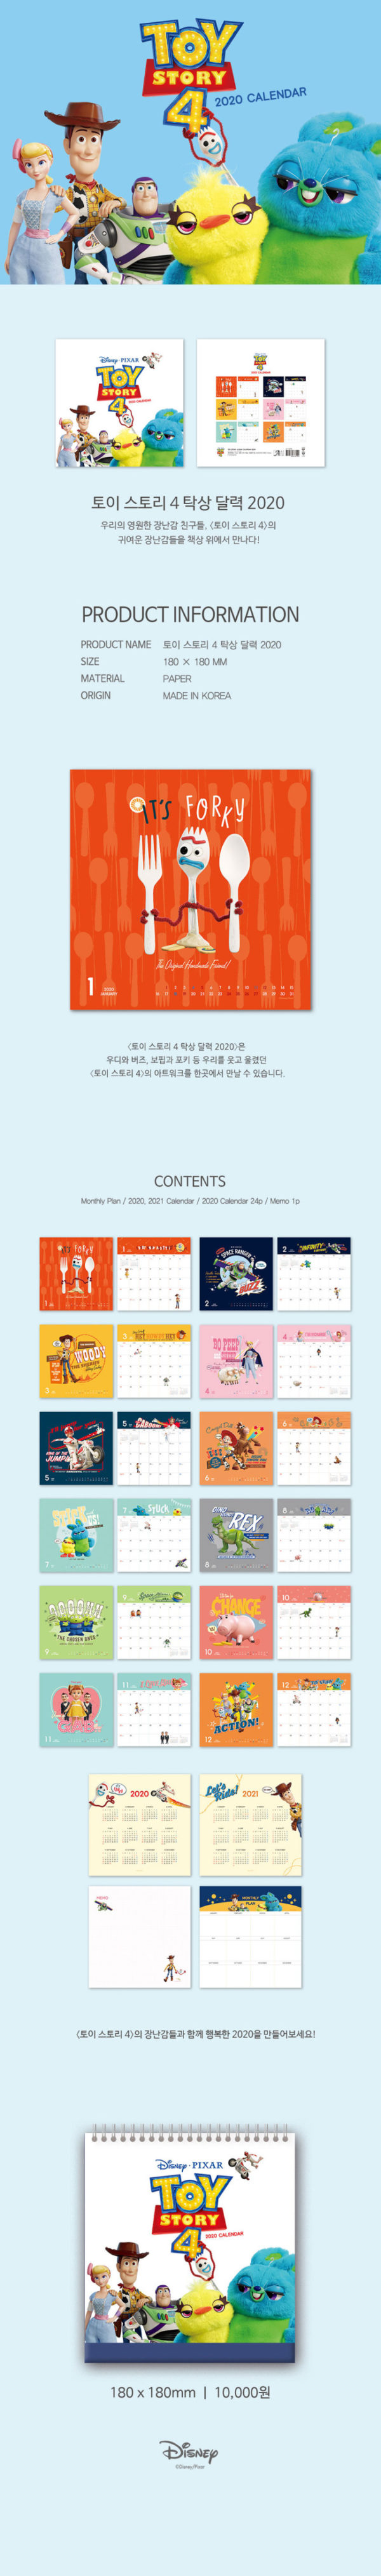 Artnouveau トイストーリー4 卓上カレンダー 韓国商品の輸入代行法人会社